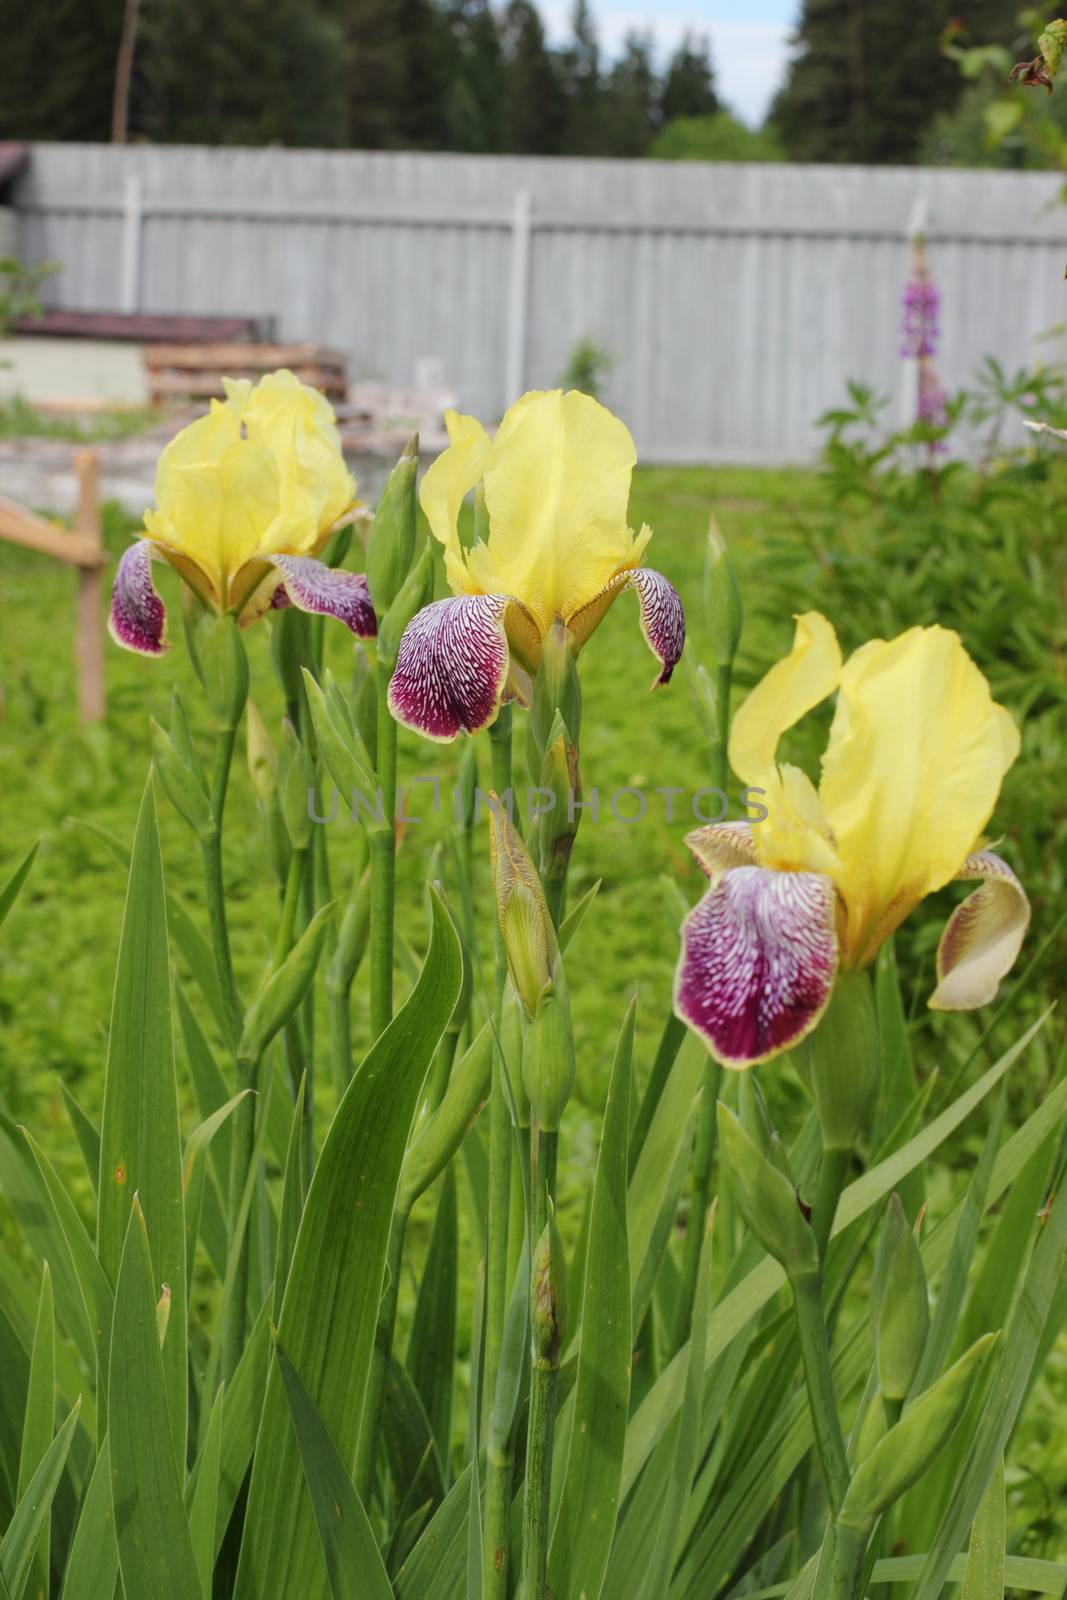 irises in the garden. flowers by Metanna